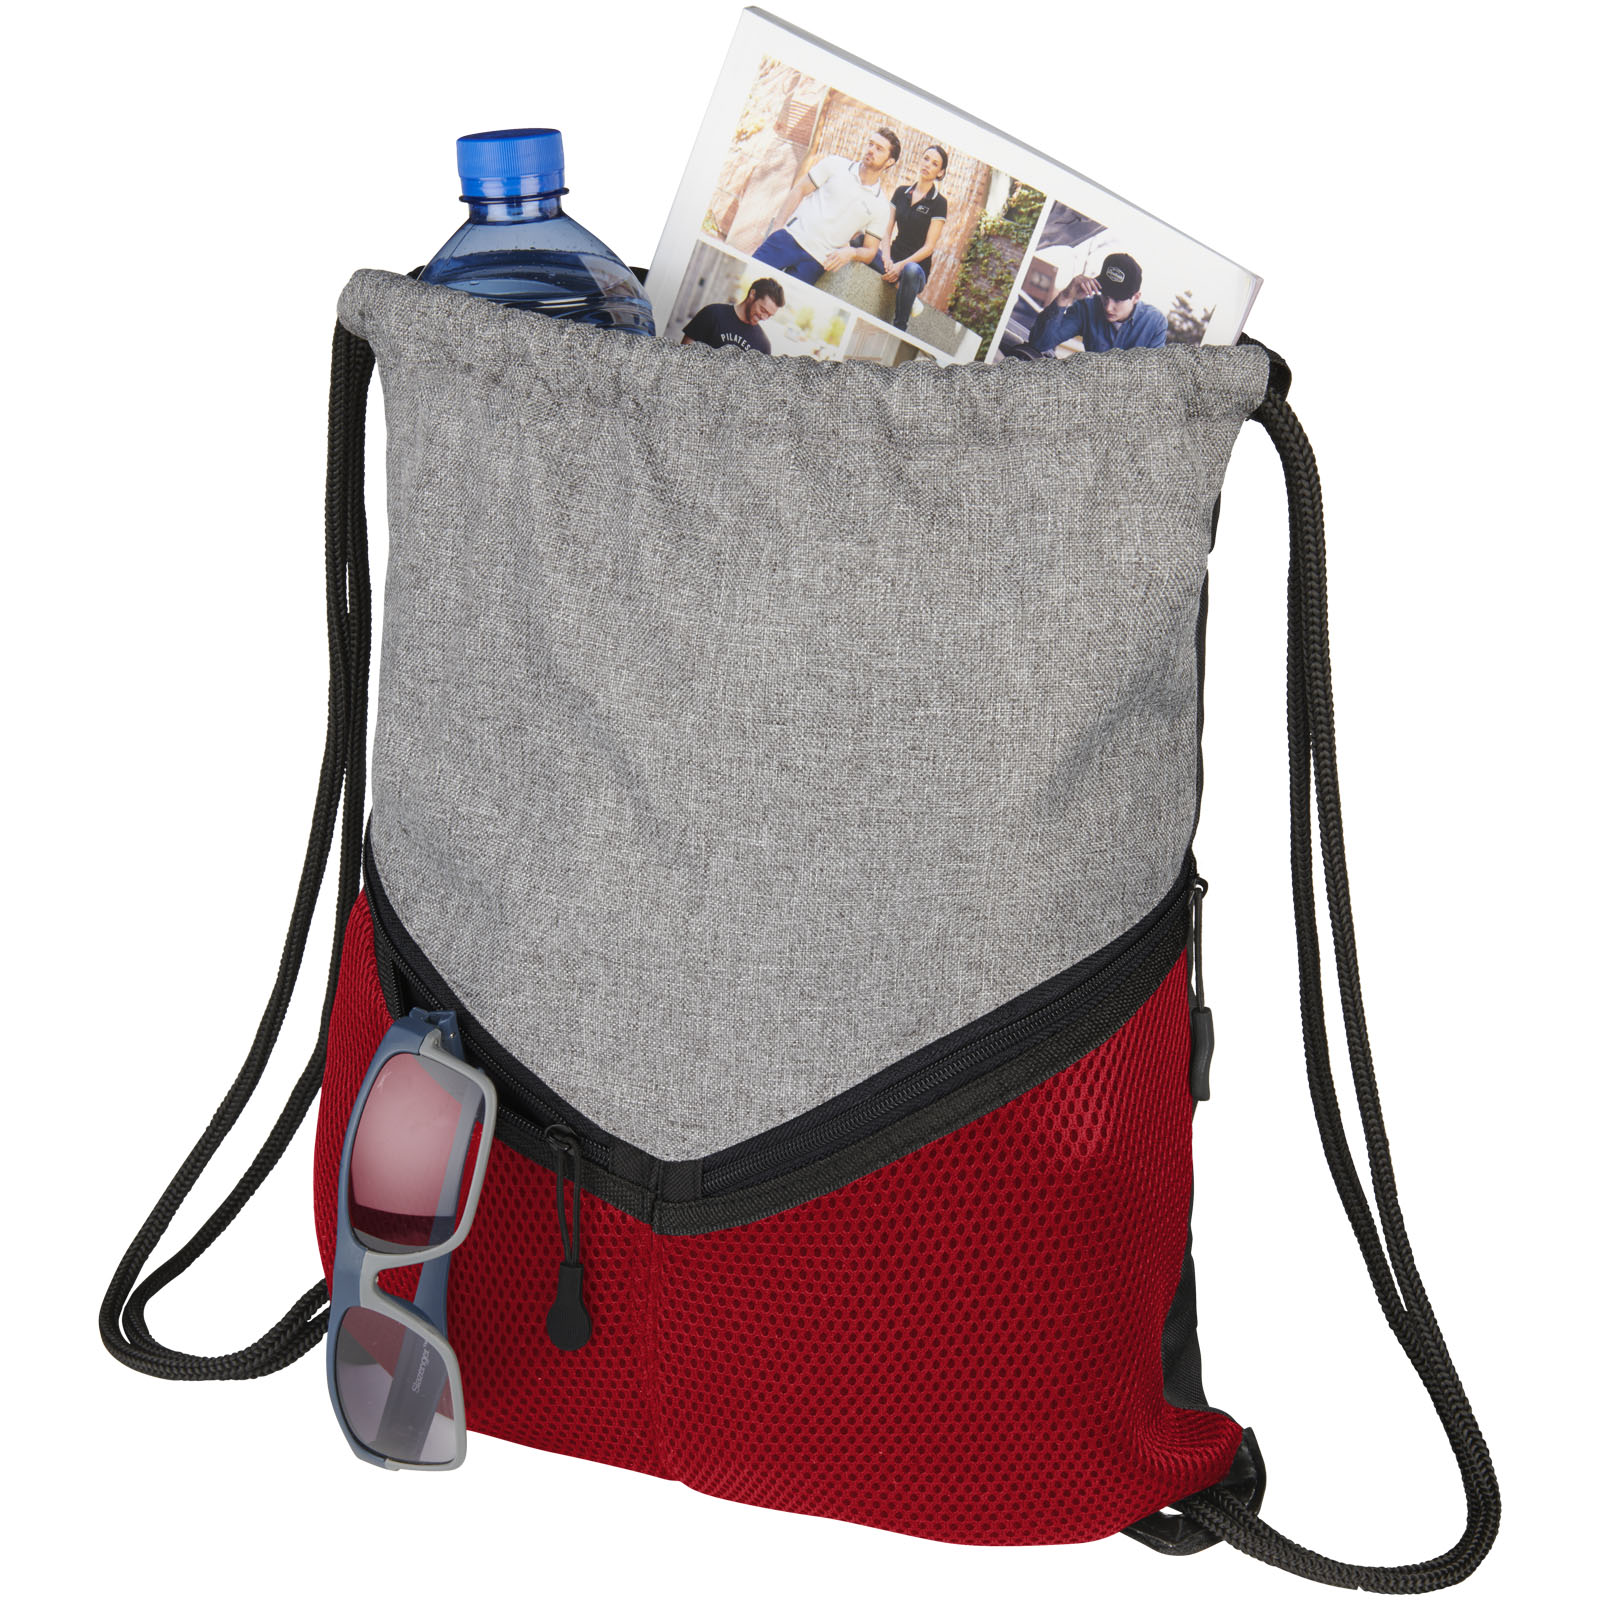 Sports drawstring backpack SALPA with mesh pockets